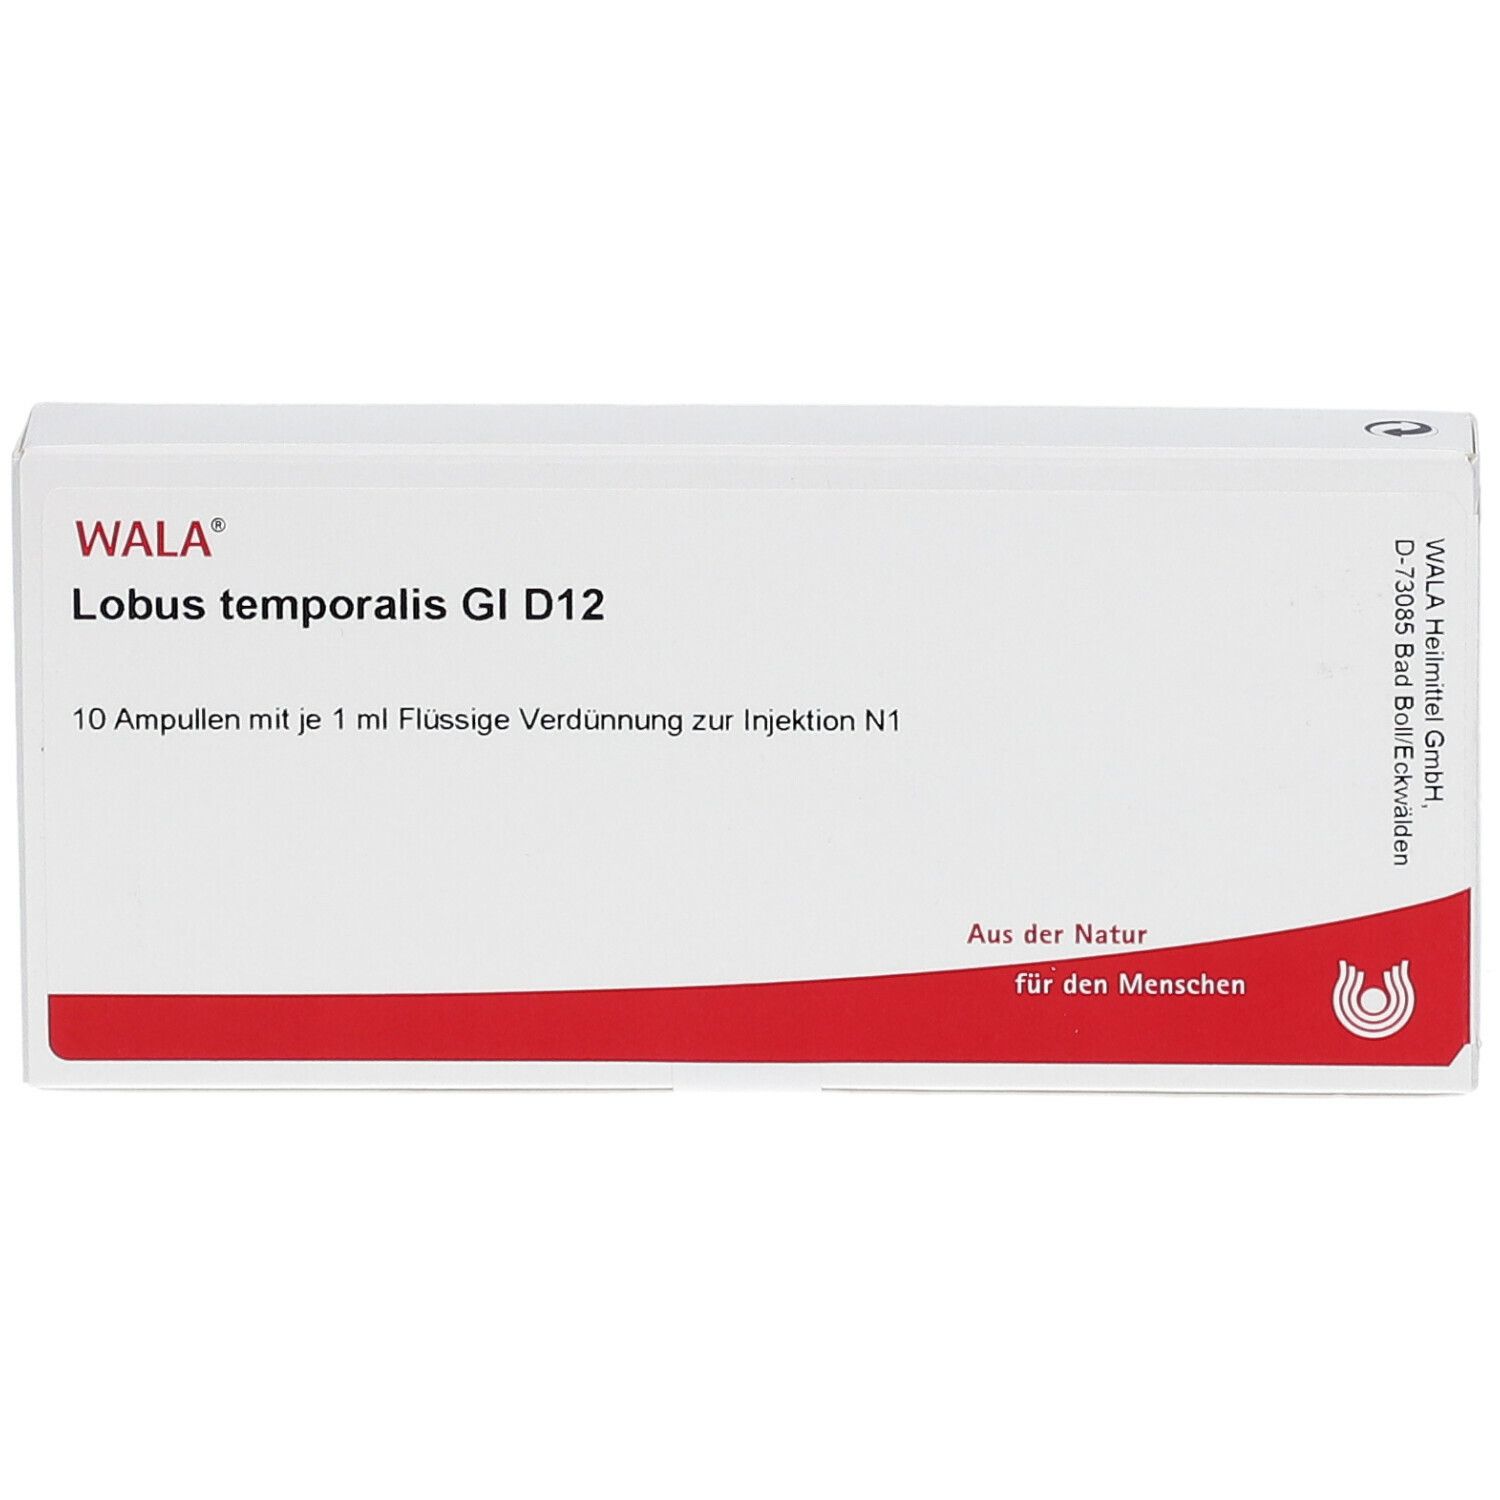 WALA® Lobus temporalis Gl D 12